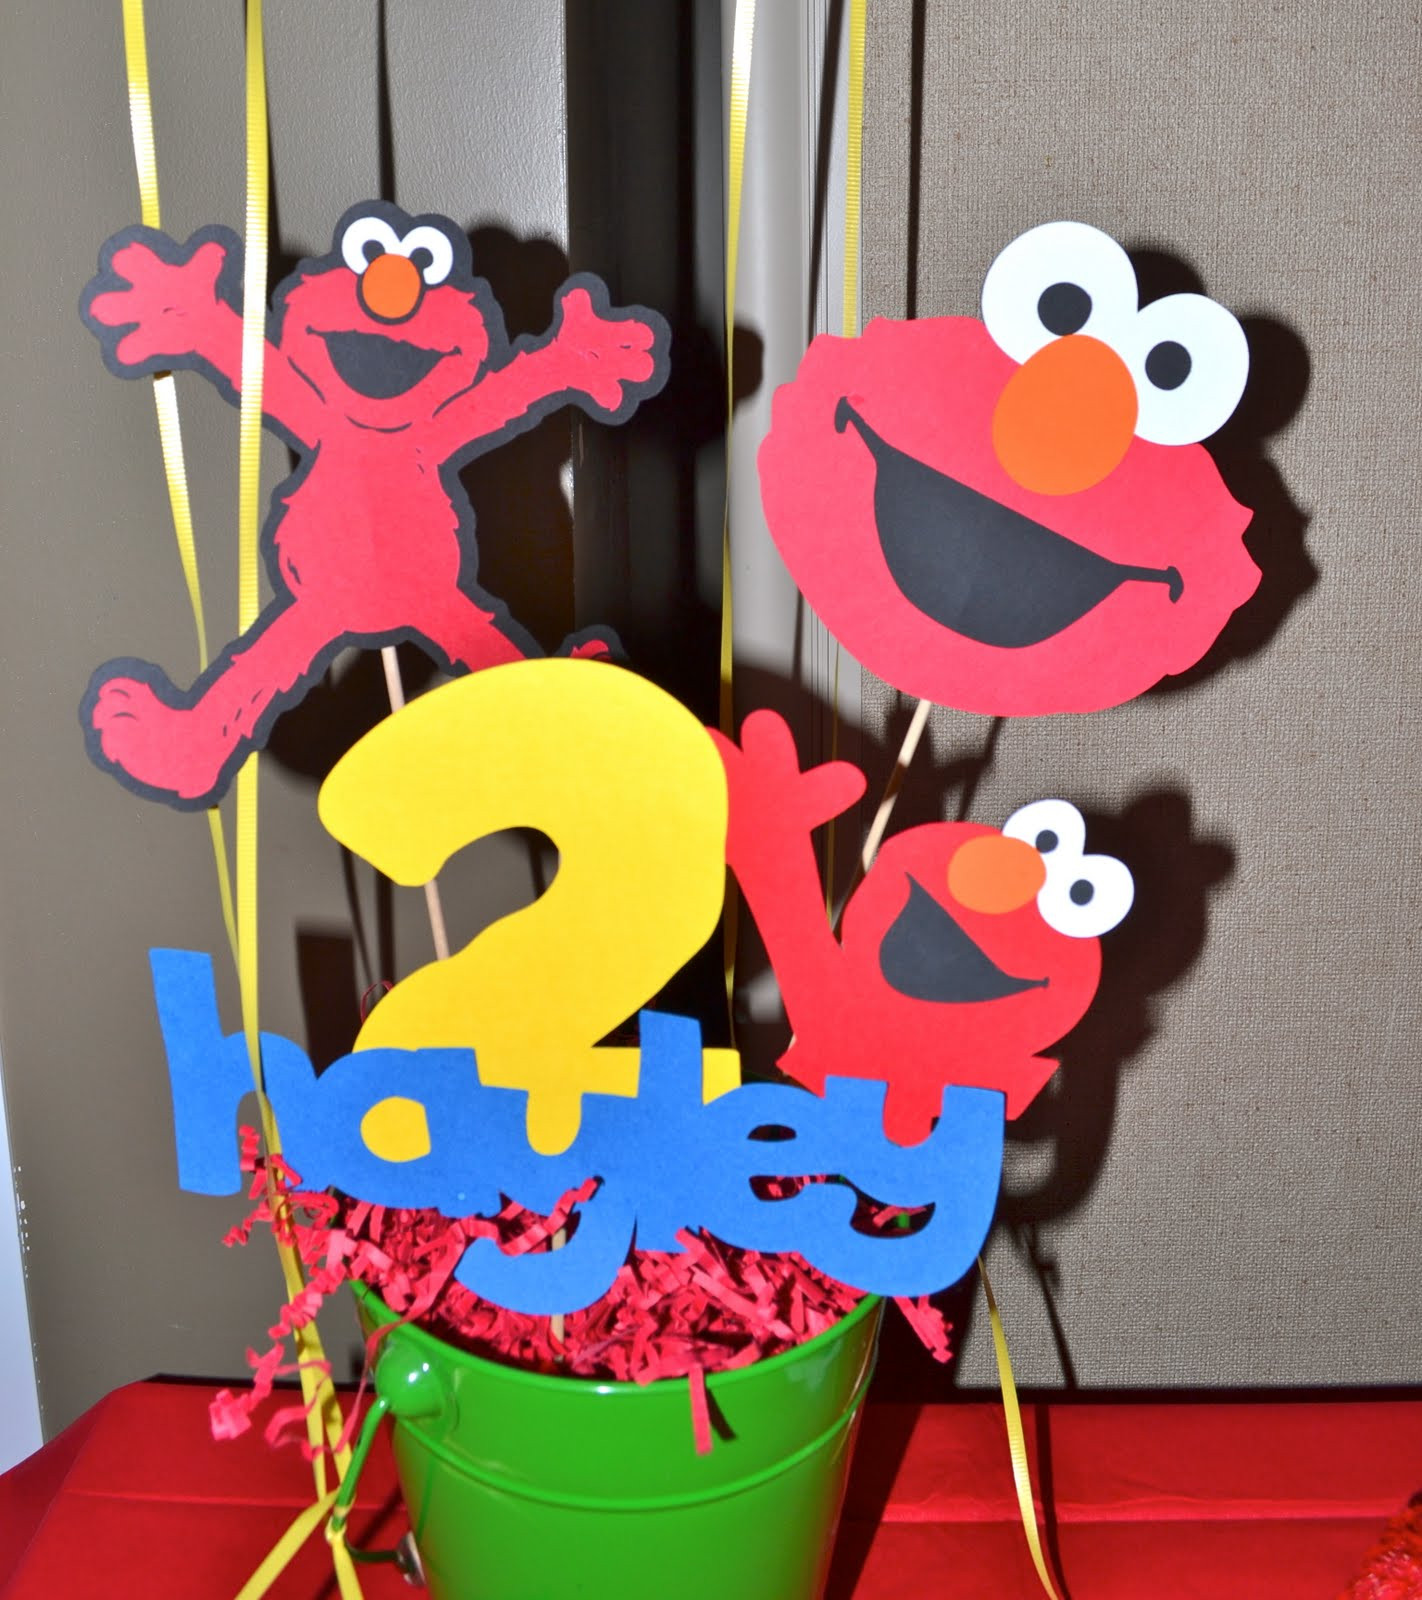 Elmo Birthday Party Ideas
 Buggy s Basement Elmo Birthday Party